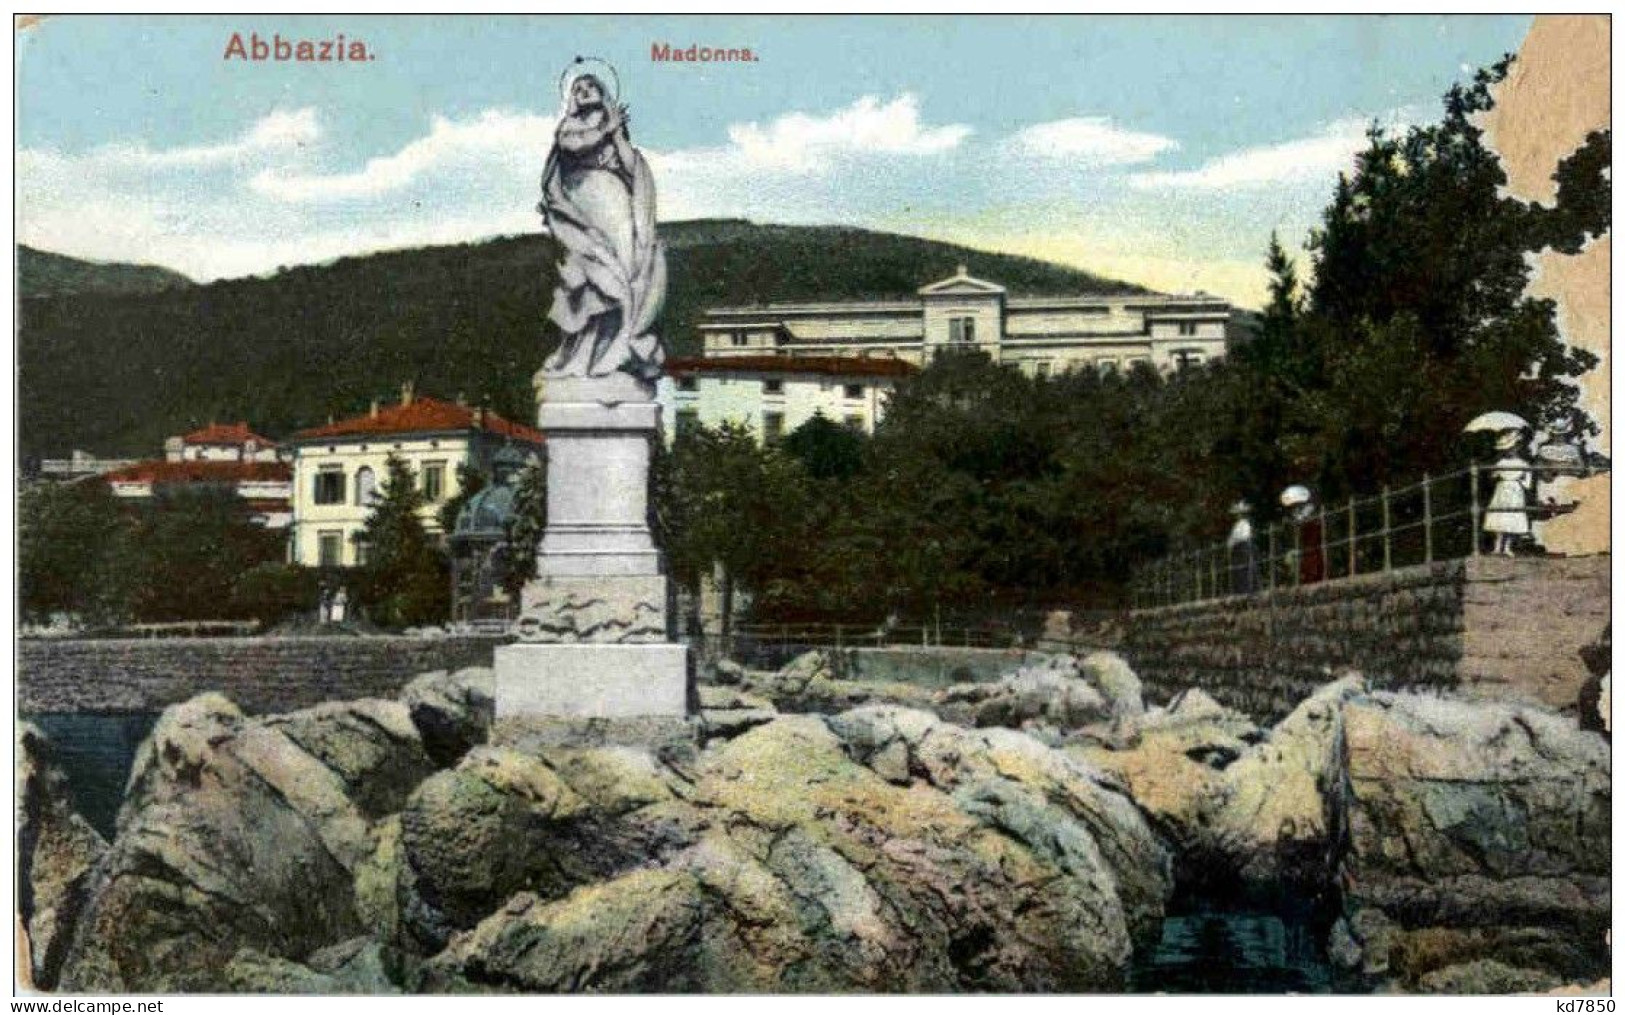 Abbazia - Madonna - Croatia